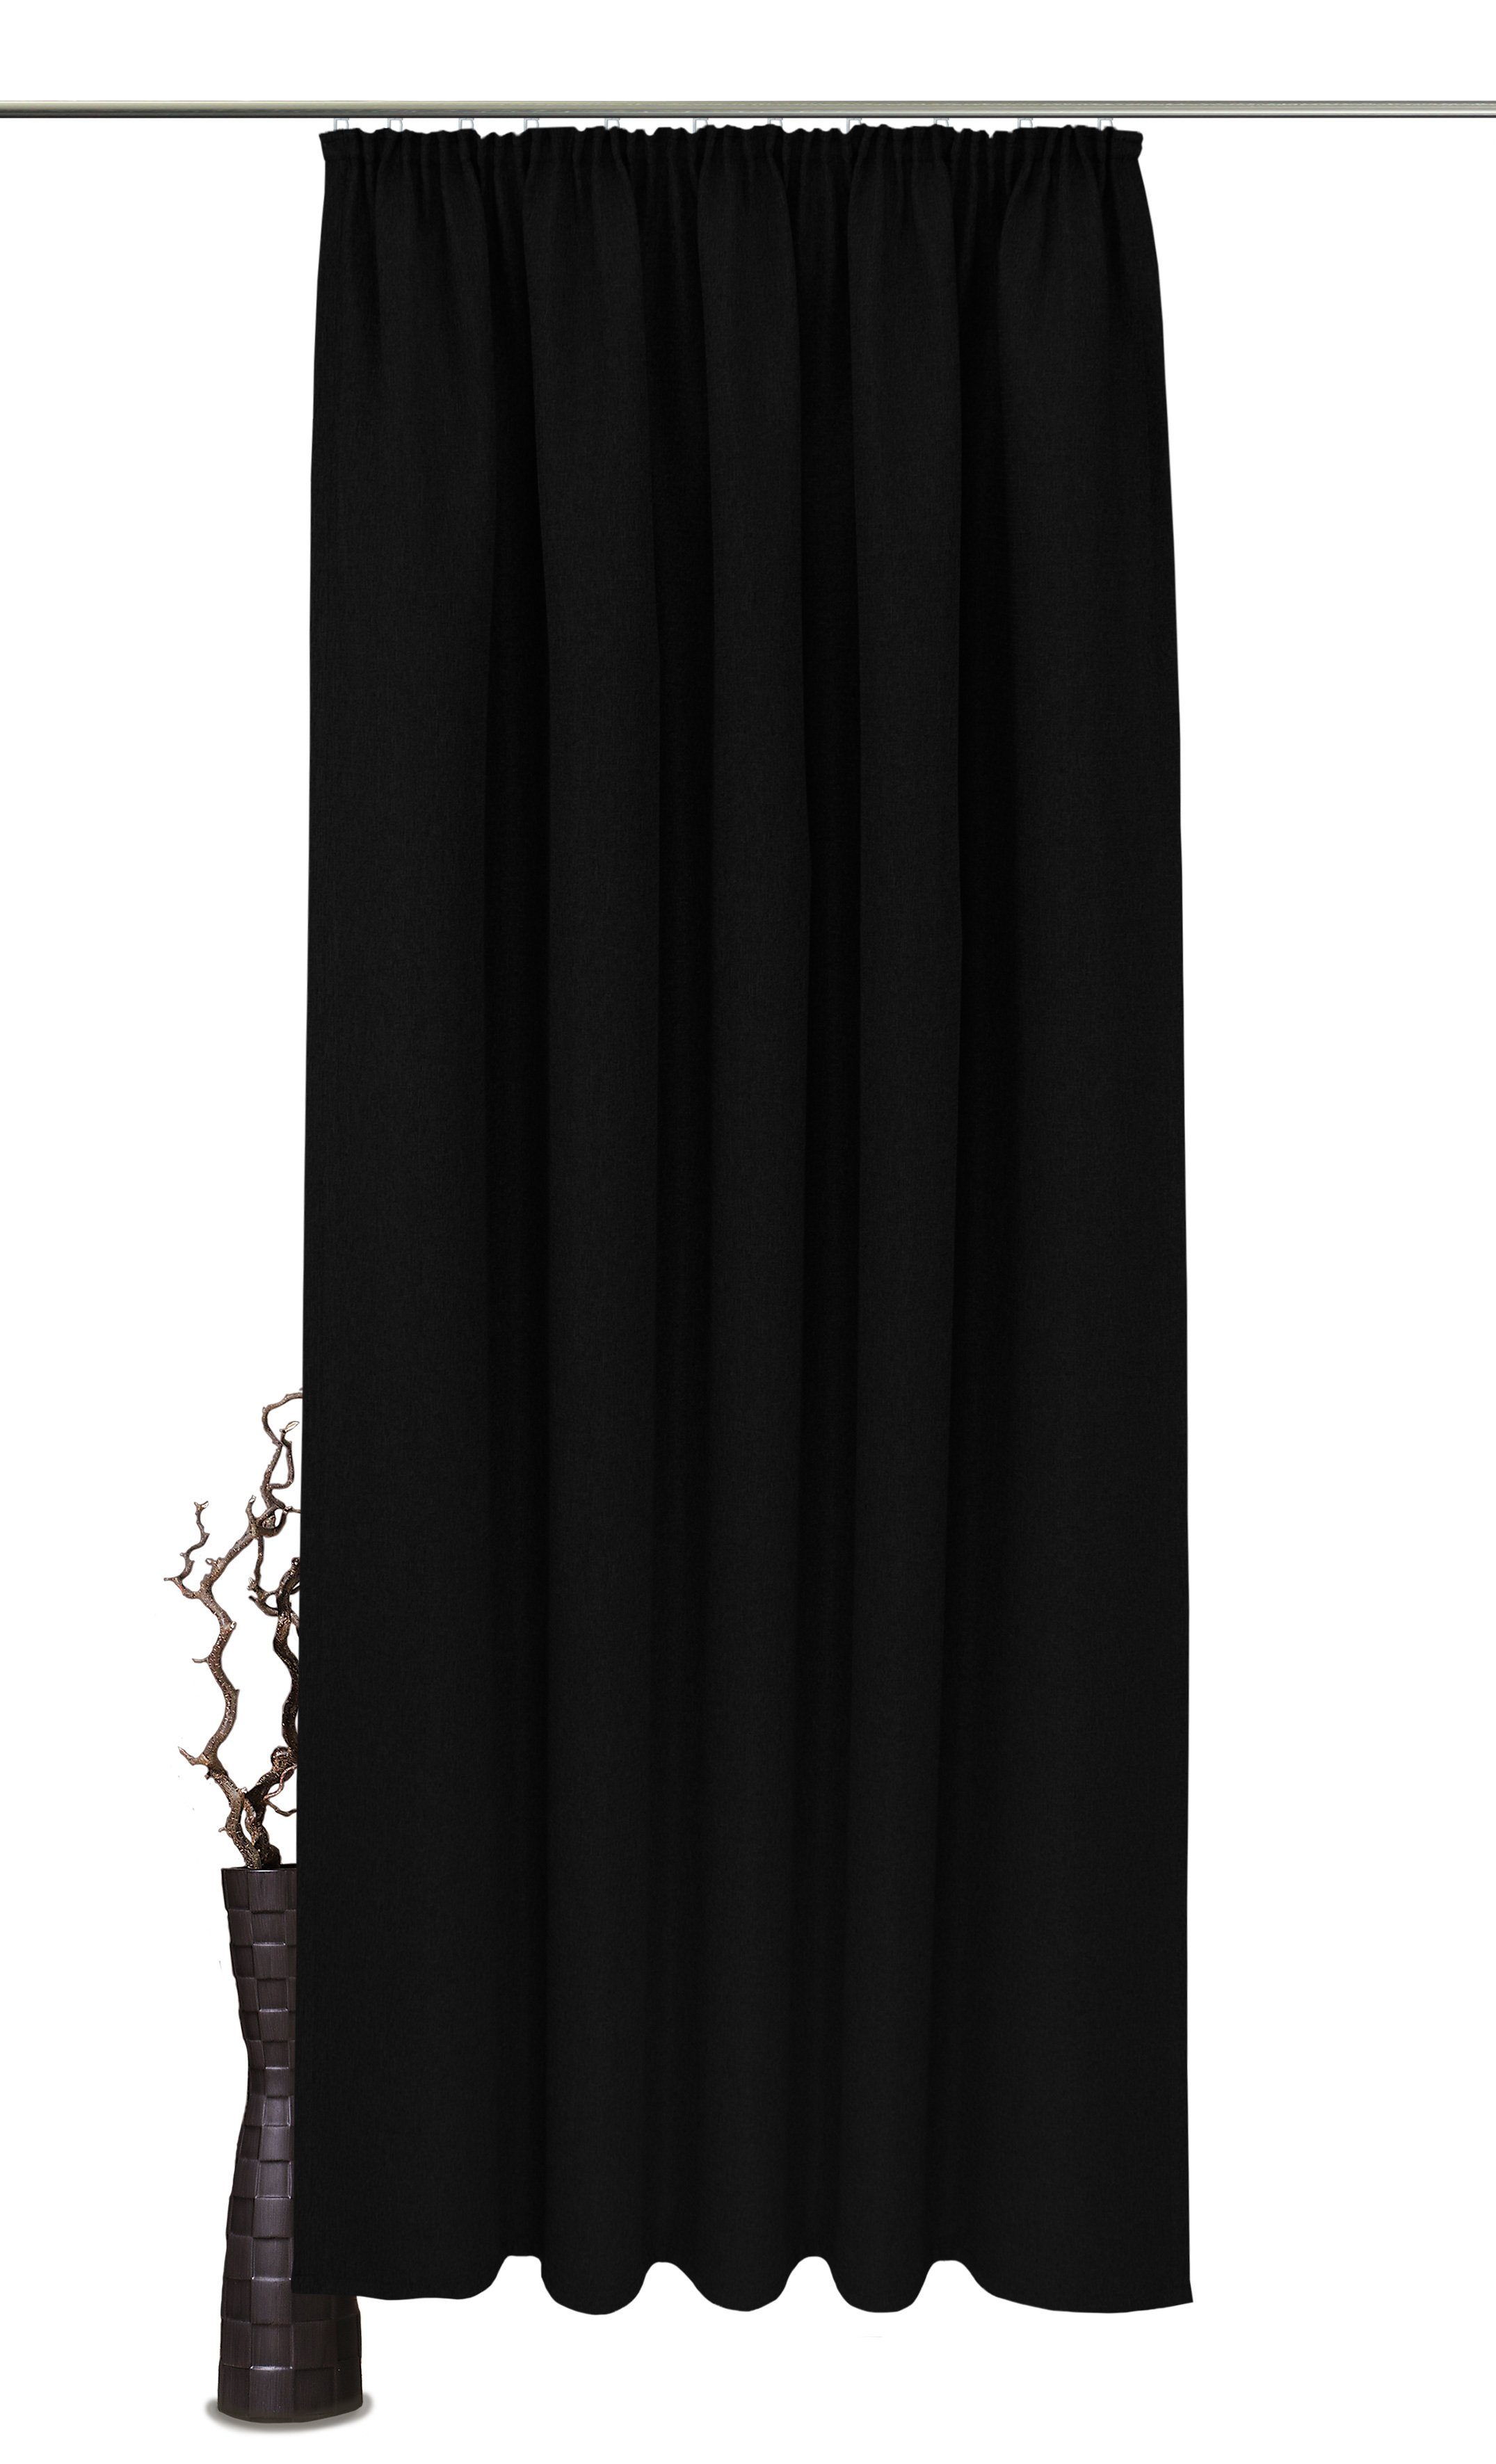 Polyester, VHG, abdunkelnd, (1 Verdunkler, Kräuselband 140 Breite cm einfarbig, Sandro, St), Vorhang